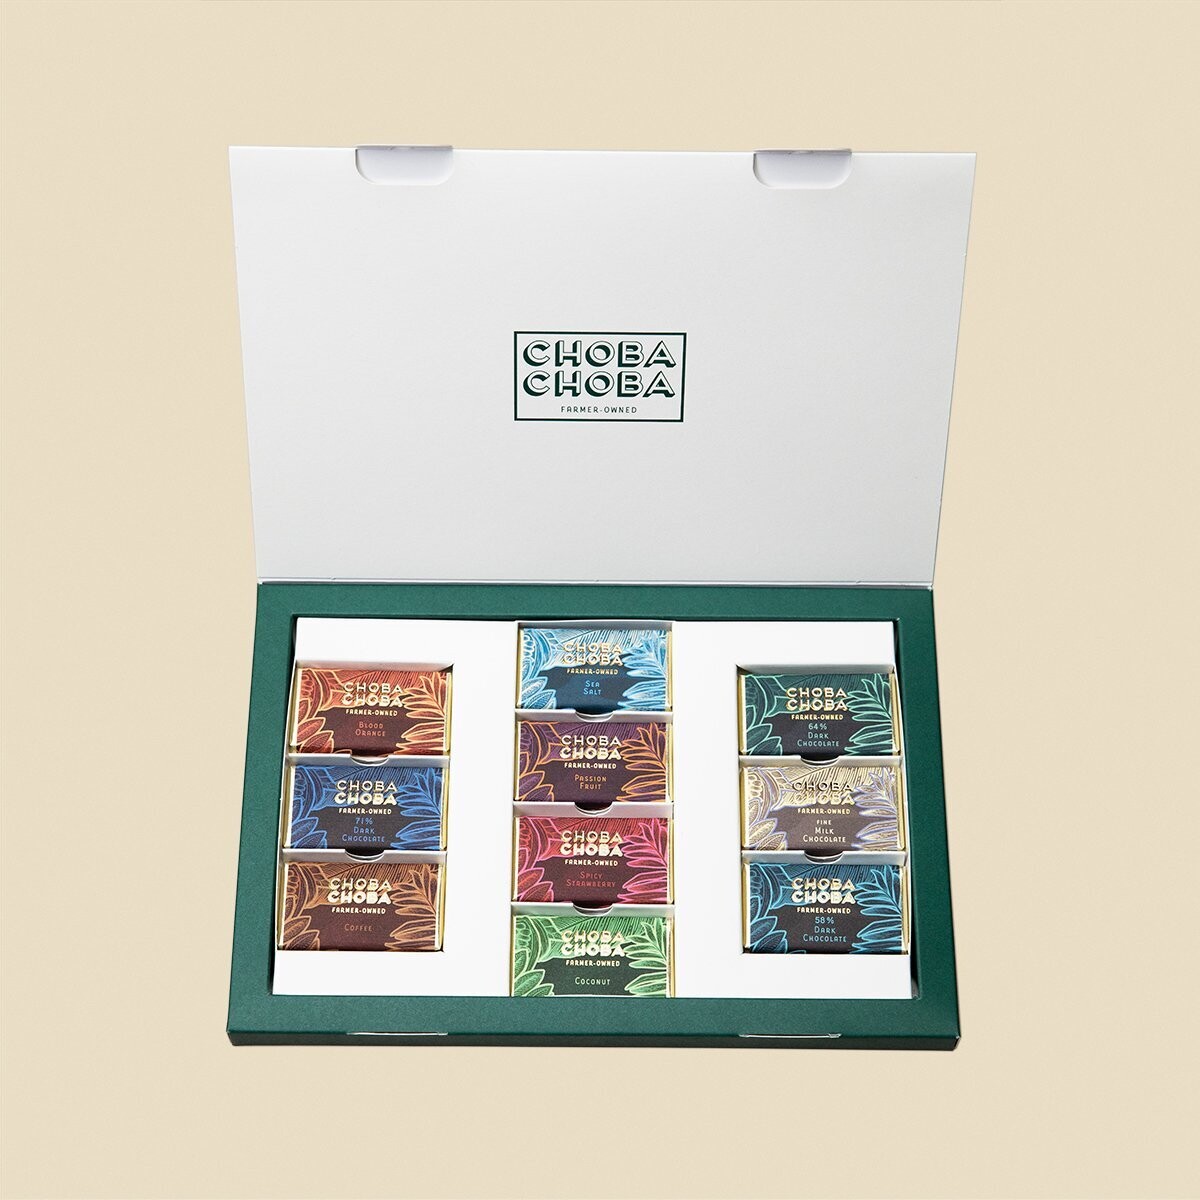 Choba Choba Degustations Box 20 Schokoladen Minitafel